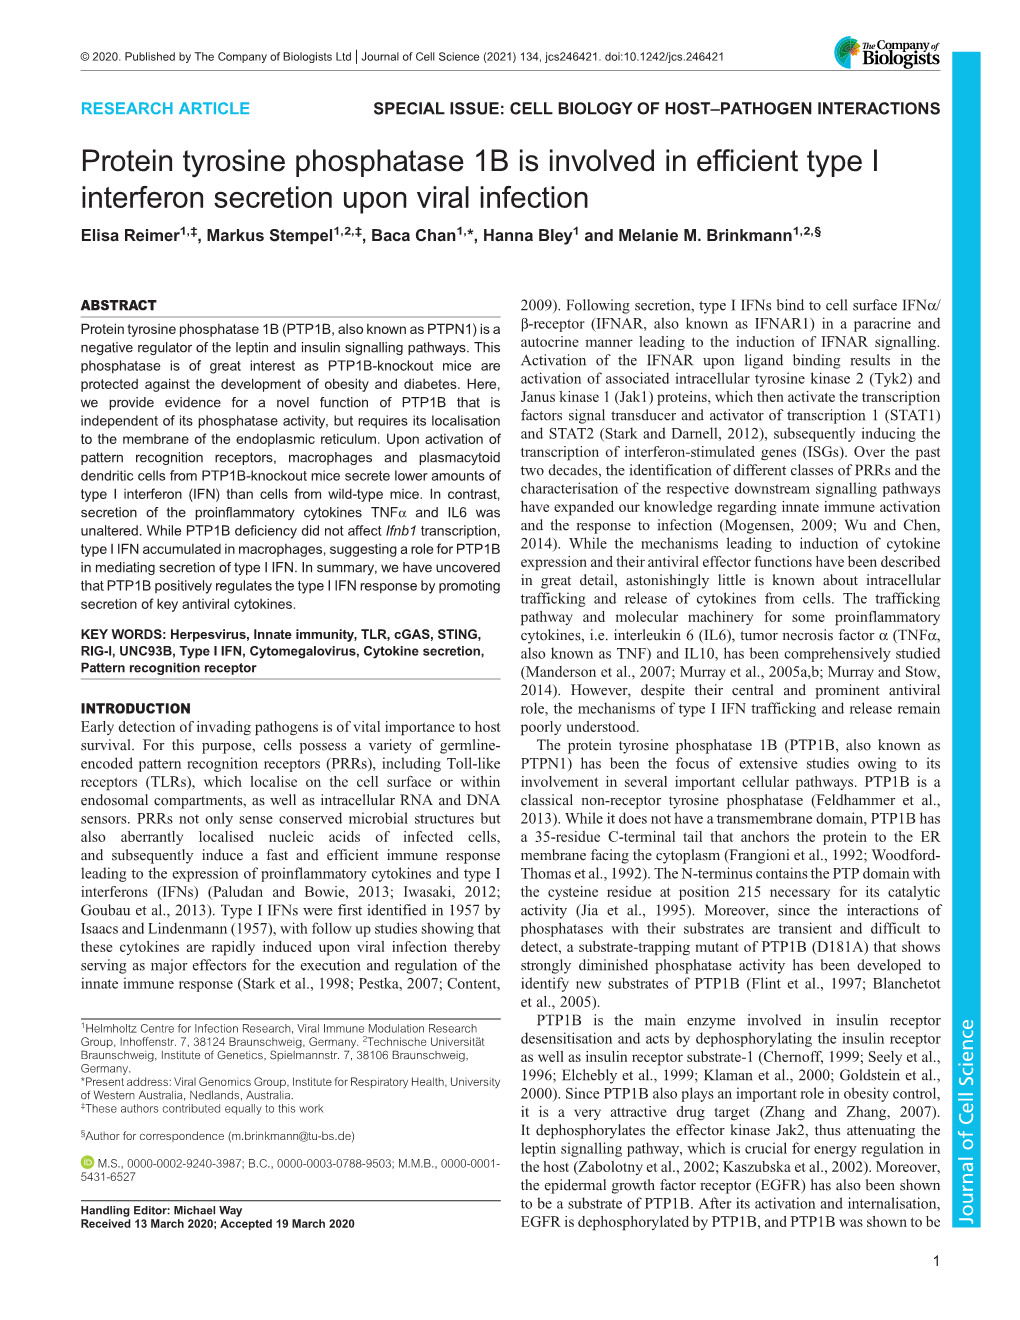 Protein Tyrosine Phosphatase 1B Is Involved in Efficient Type I Interferon